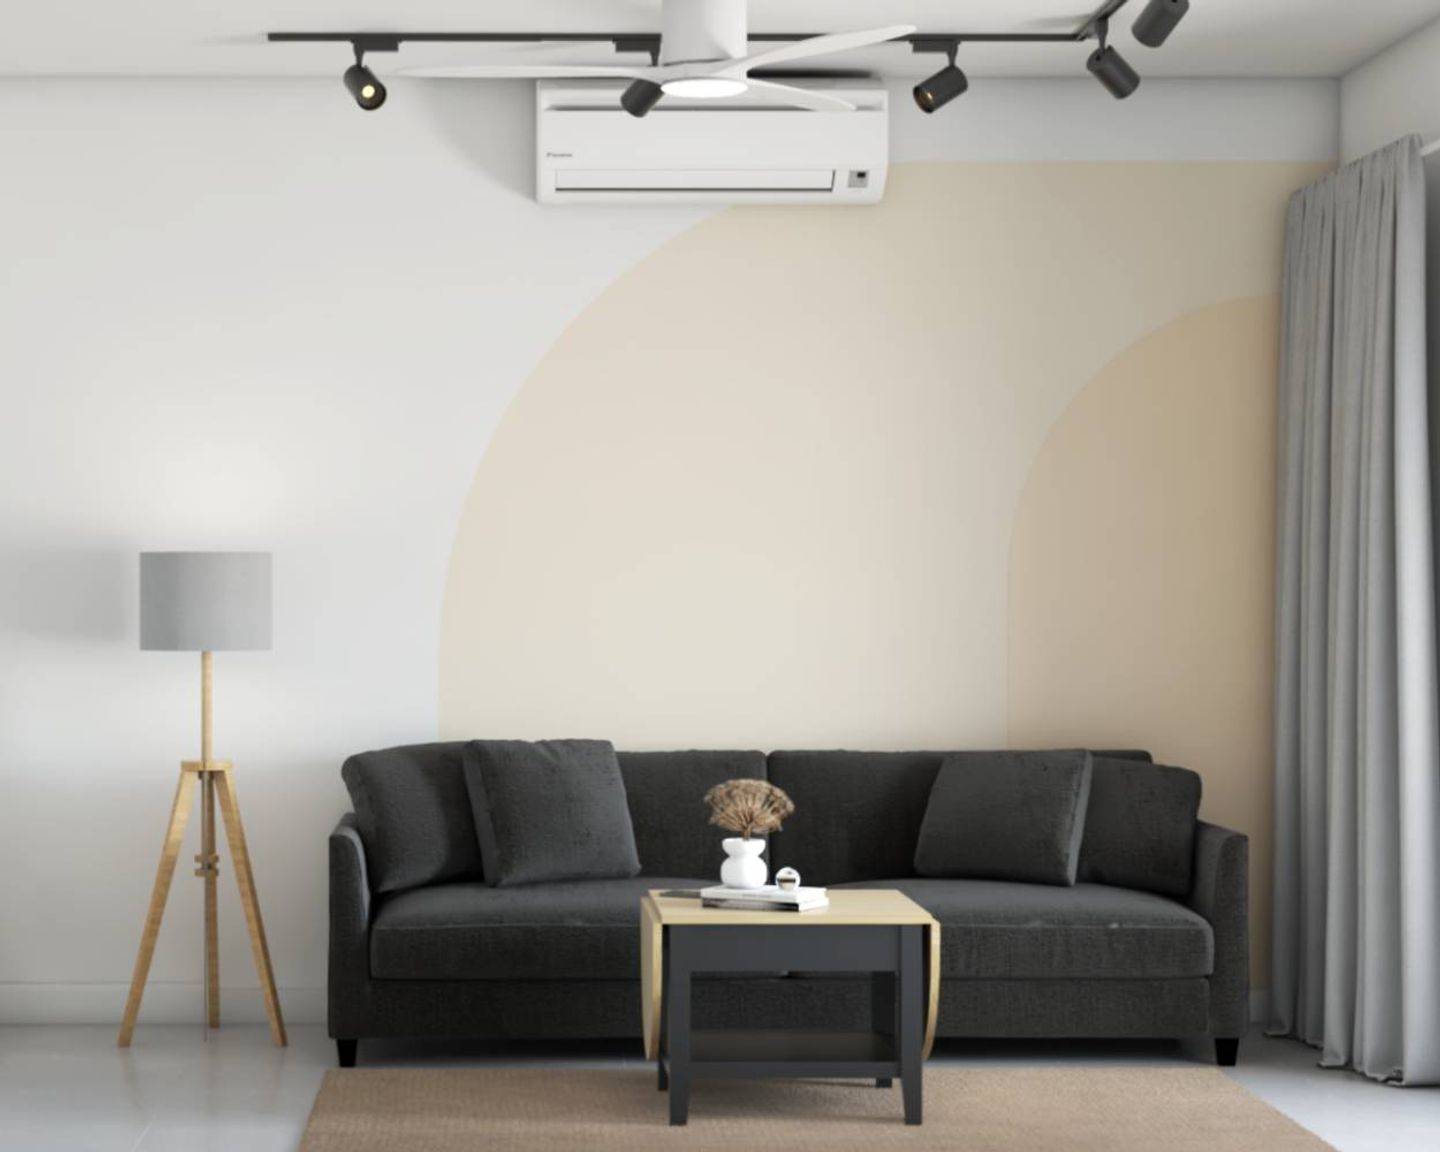 14 m² Living Room Design With Black 2-Seater Sofa - Livspace